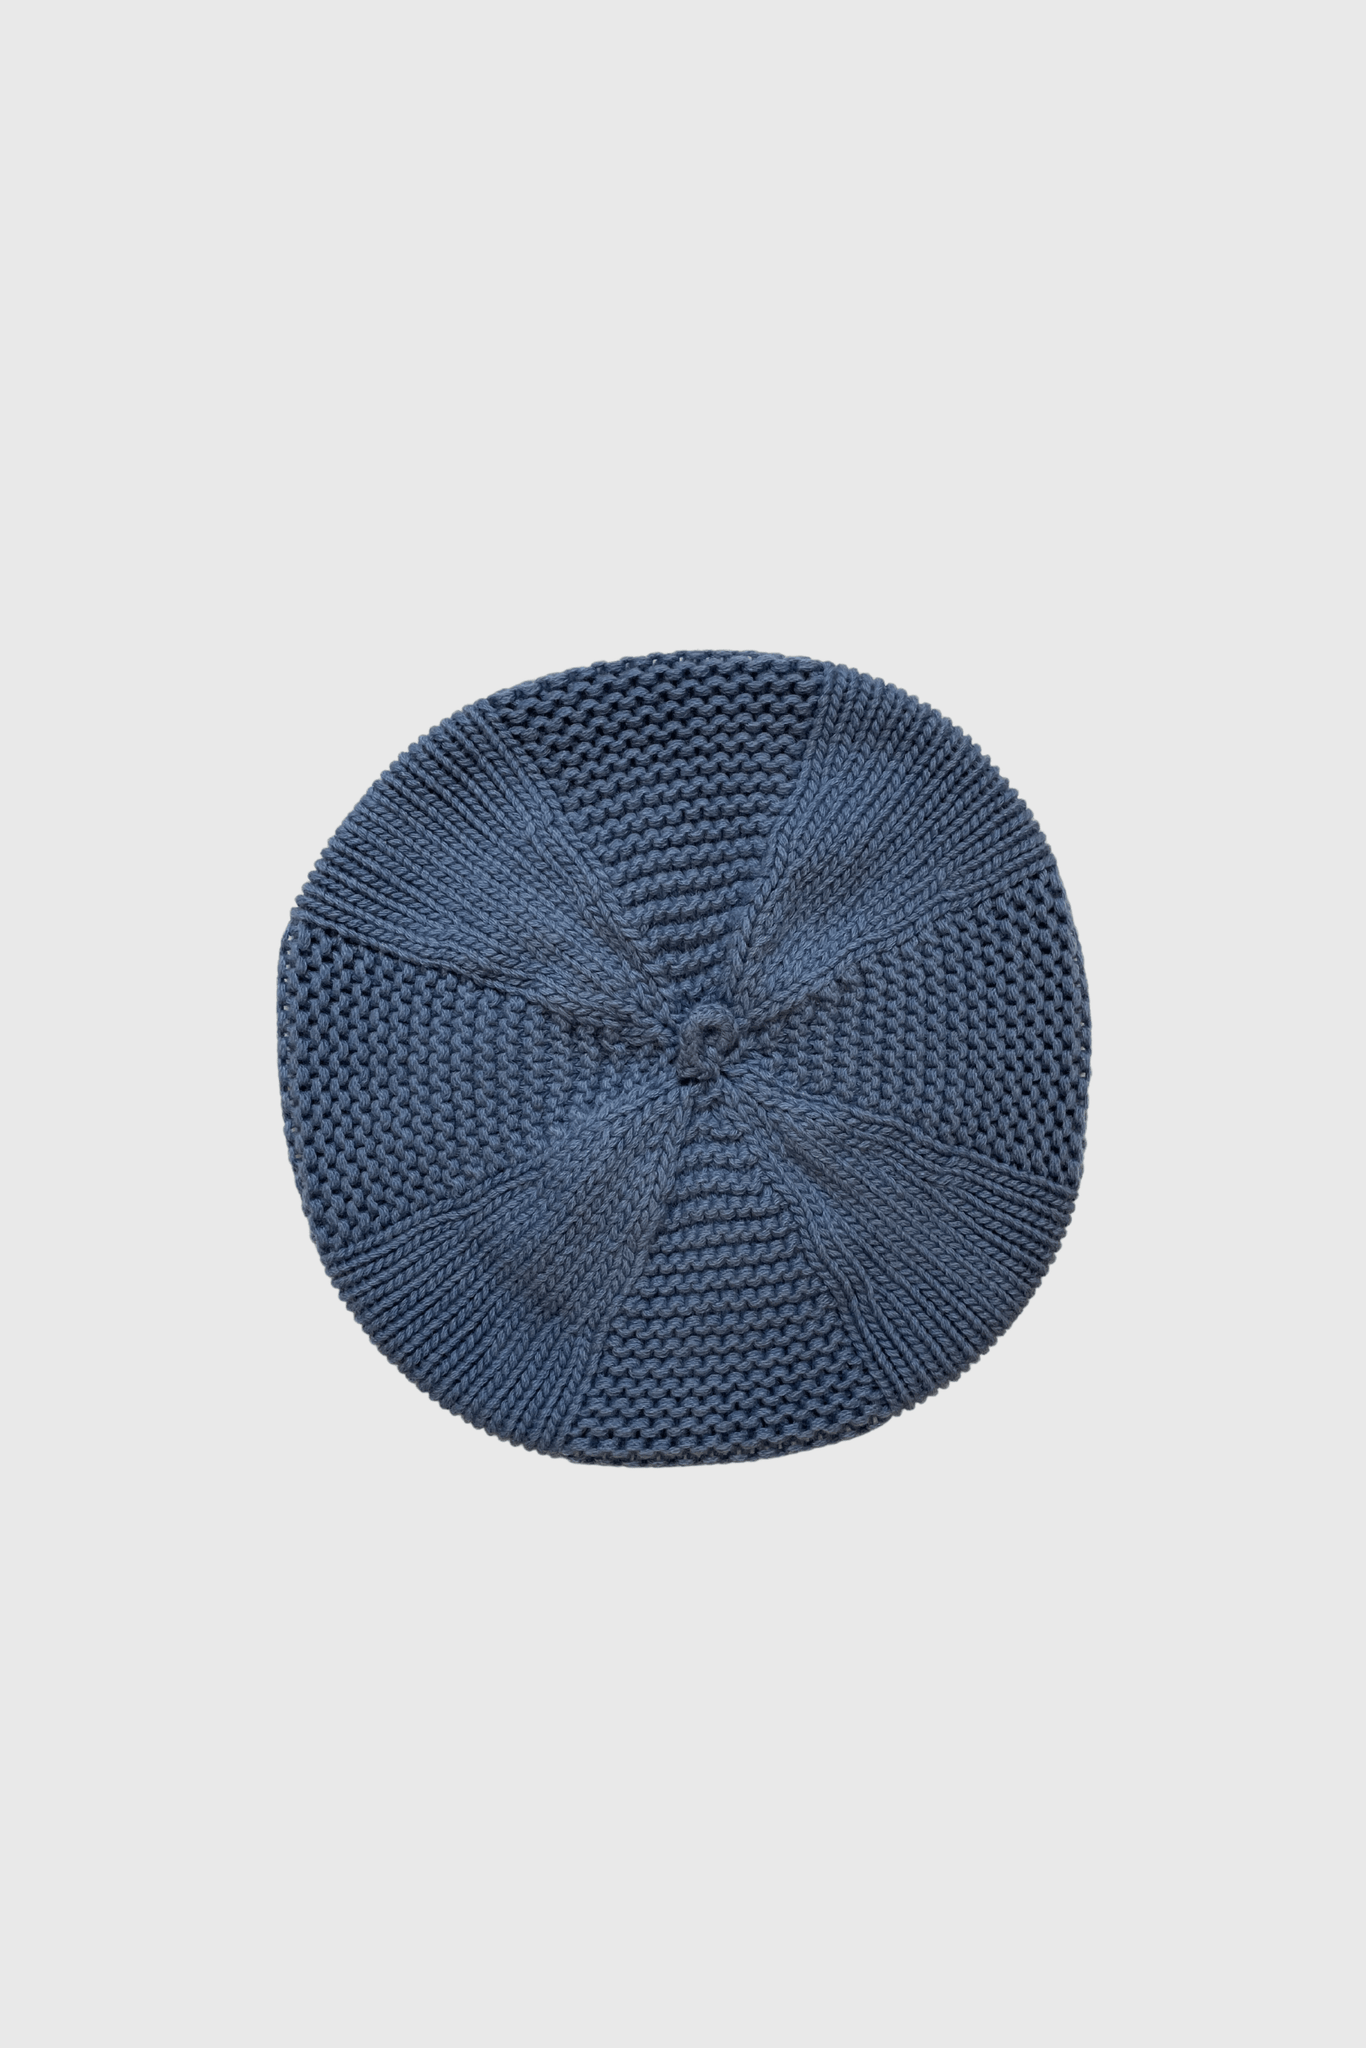 Women's Scottish Cashmere Beret - Blue Cashmere Beret - Luxury Hats - Soft Accessories by Lavender Hill Clothing